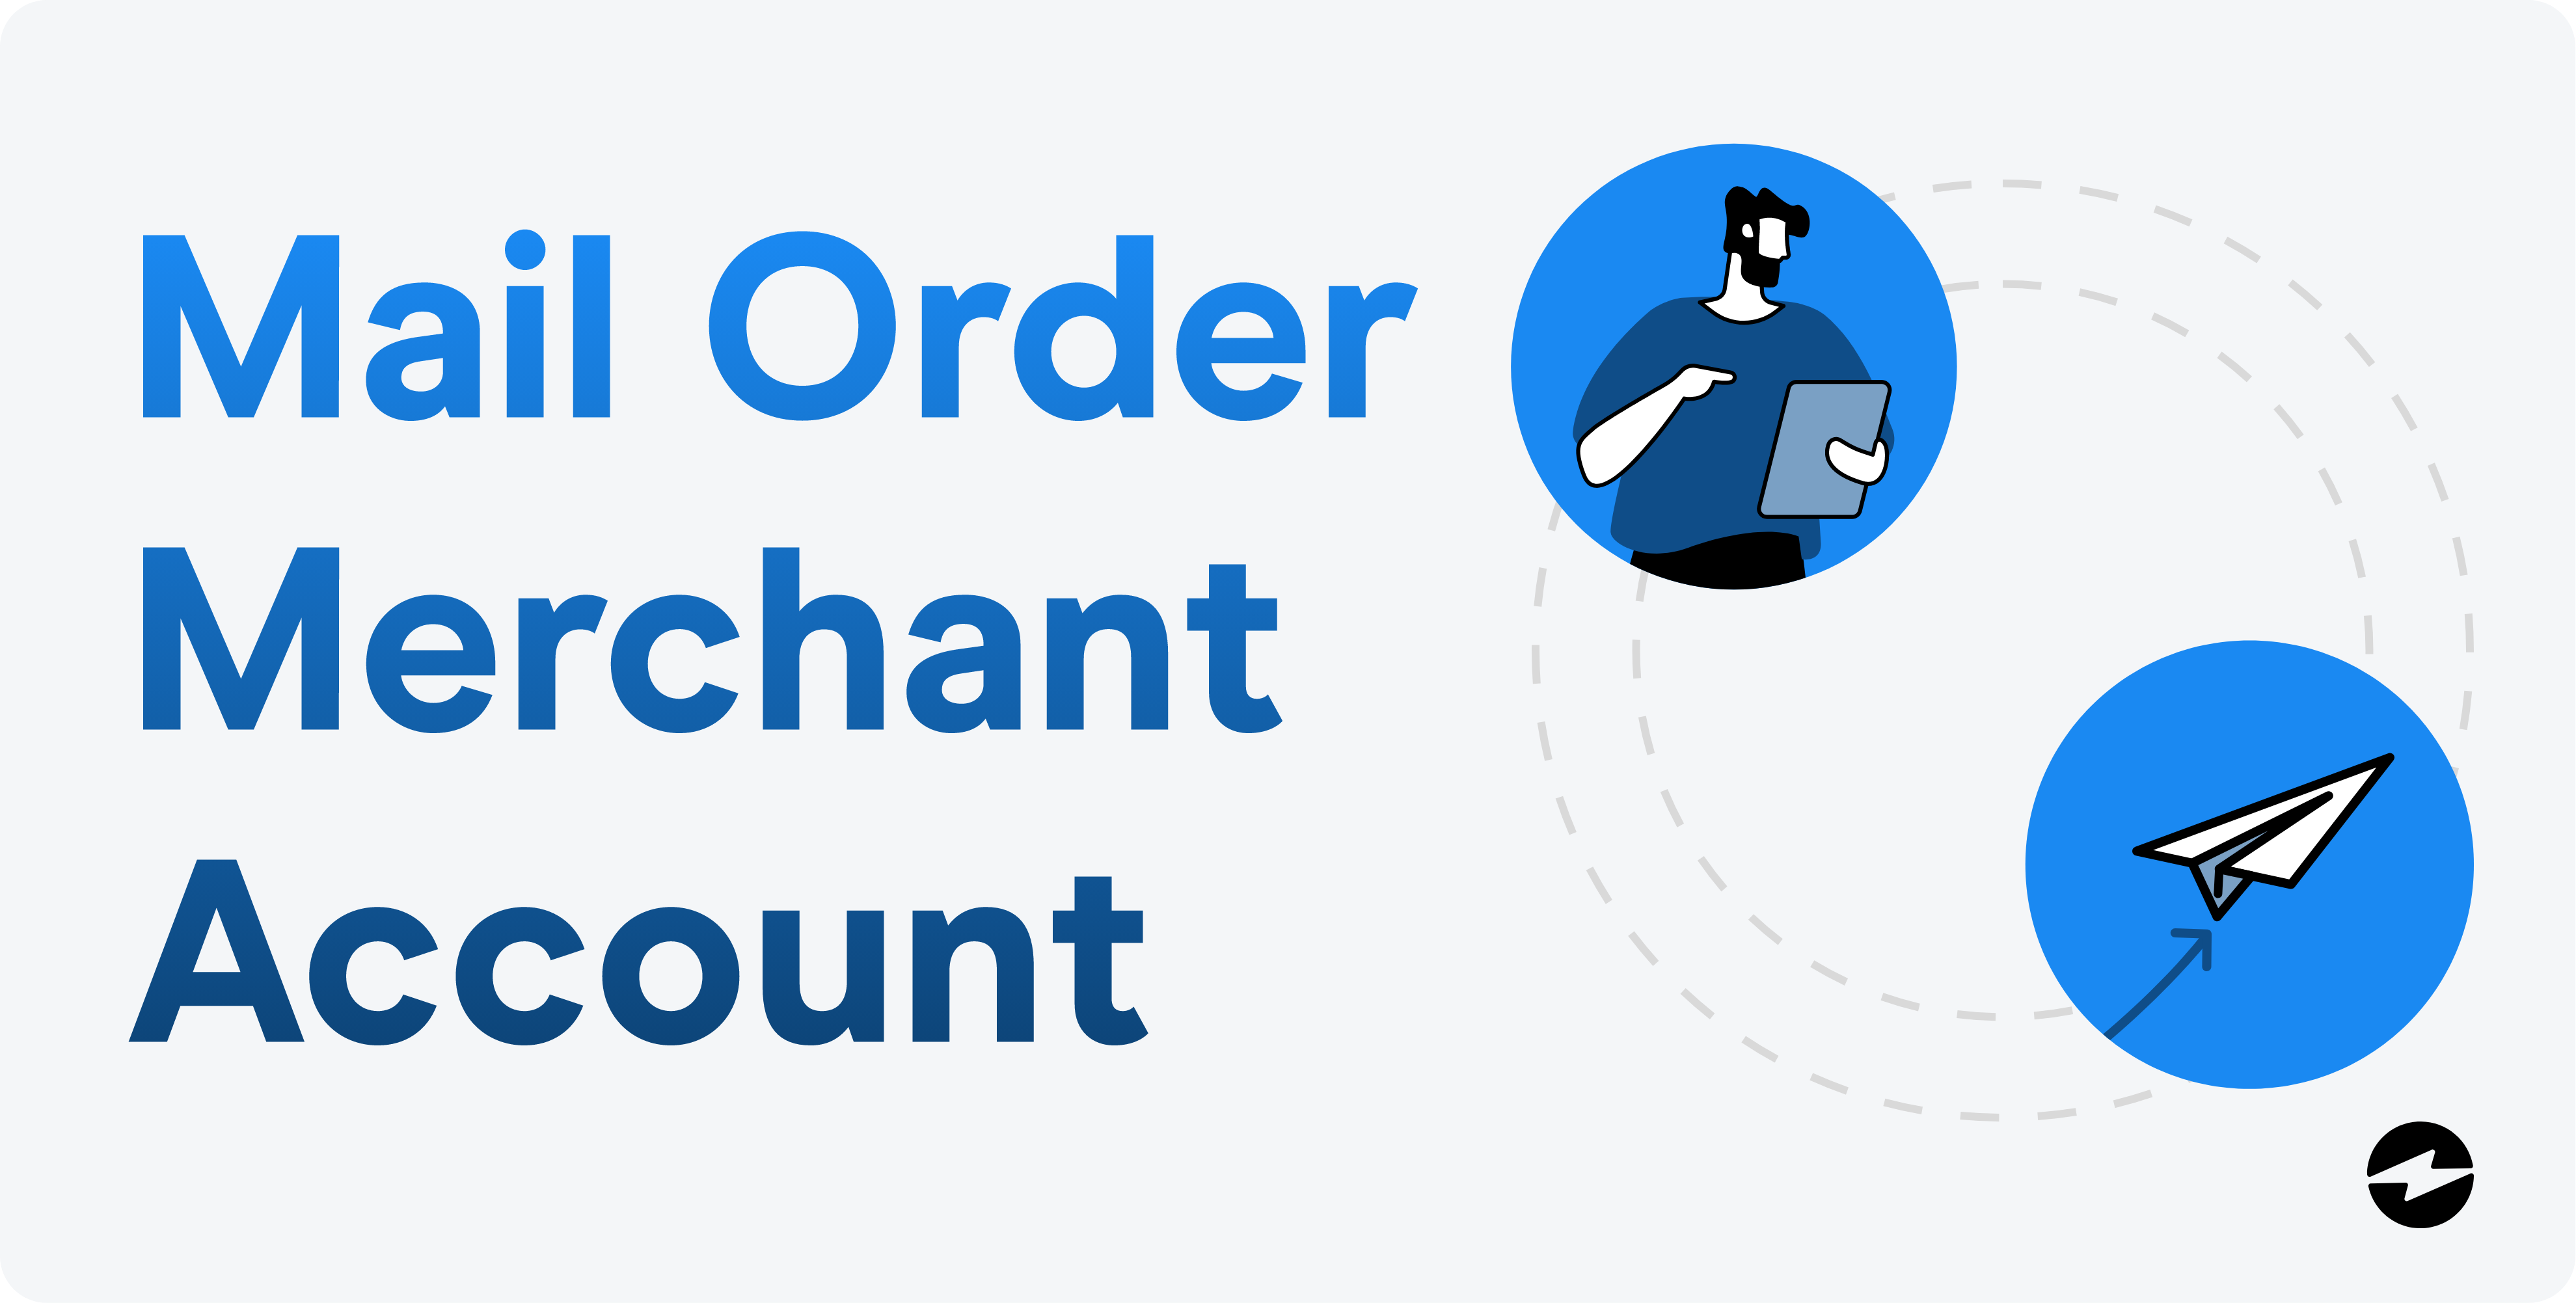 Mail Order Merchant Accounts